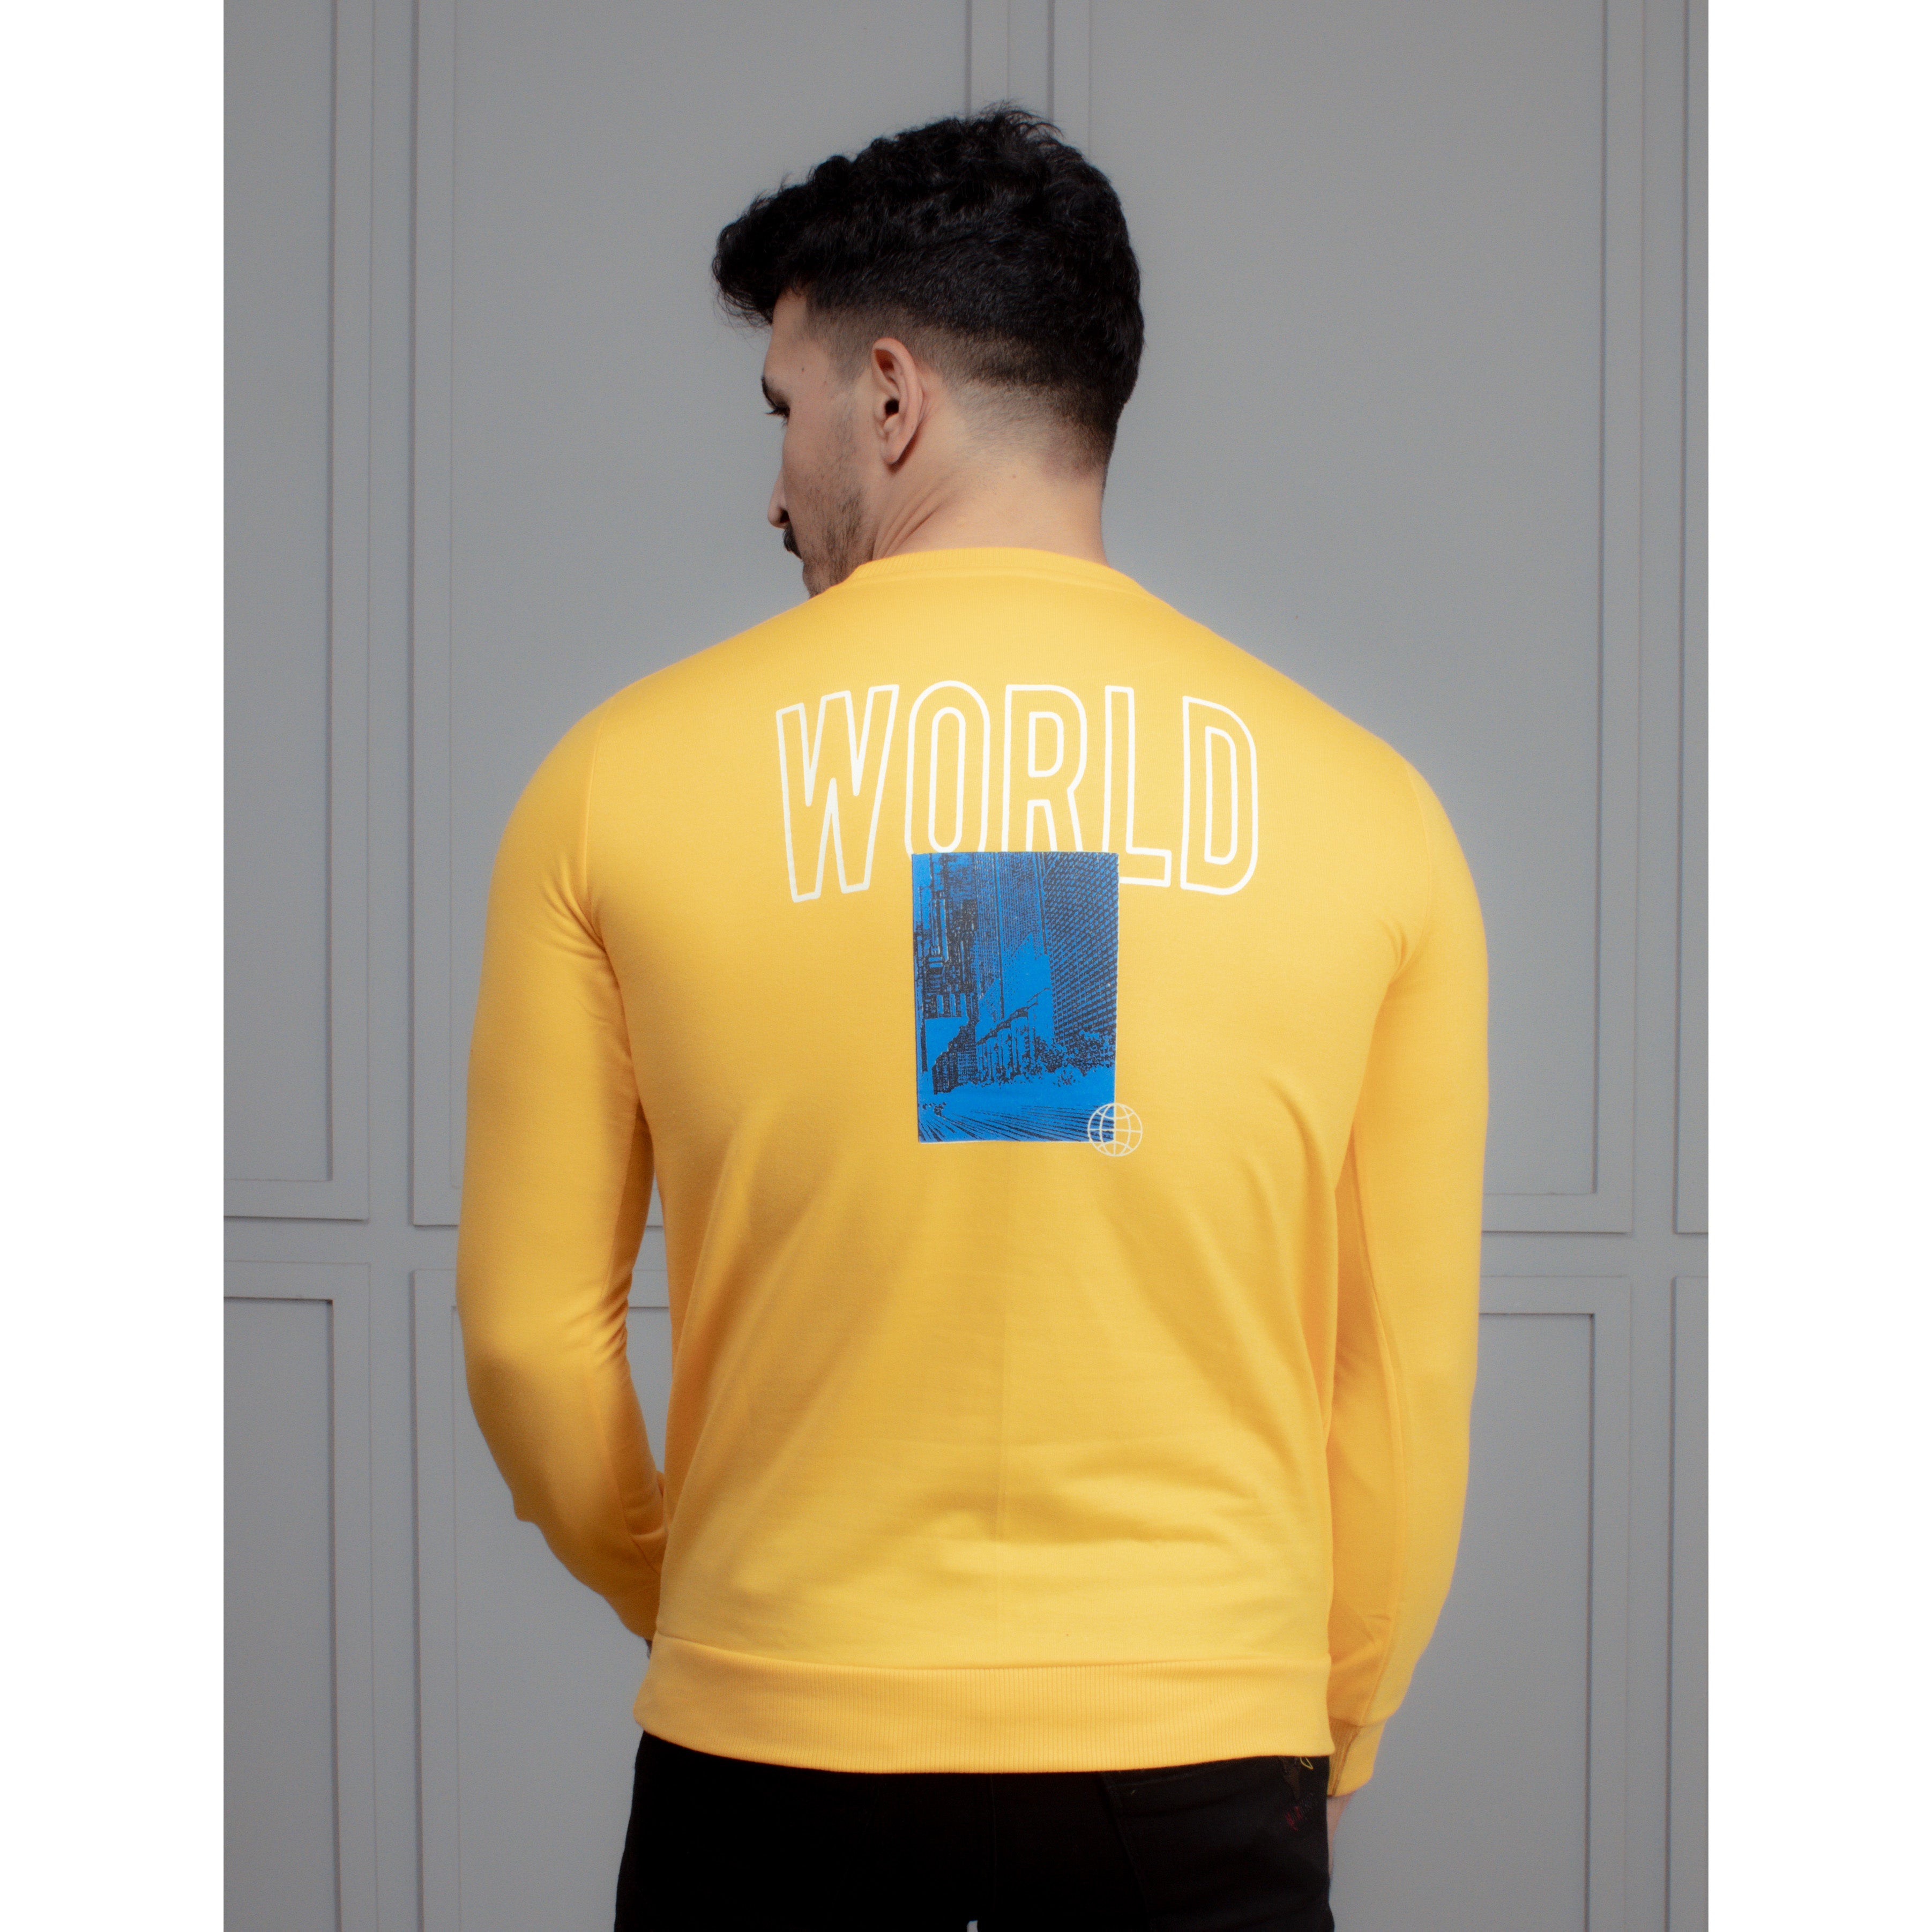 Mens Sweatshirt (World)